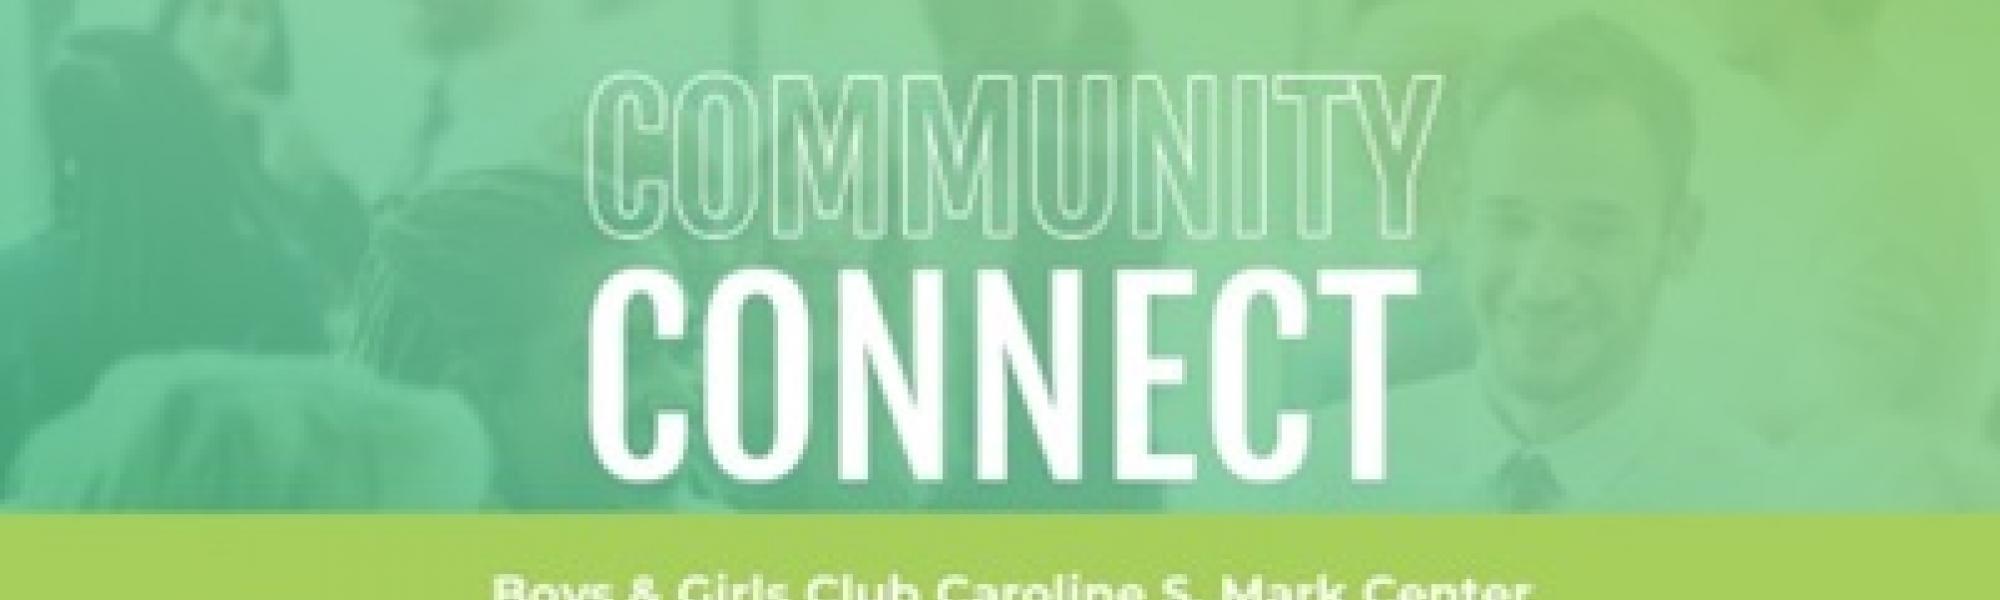 Community Connect 